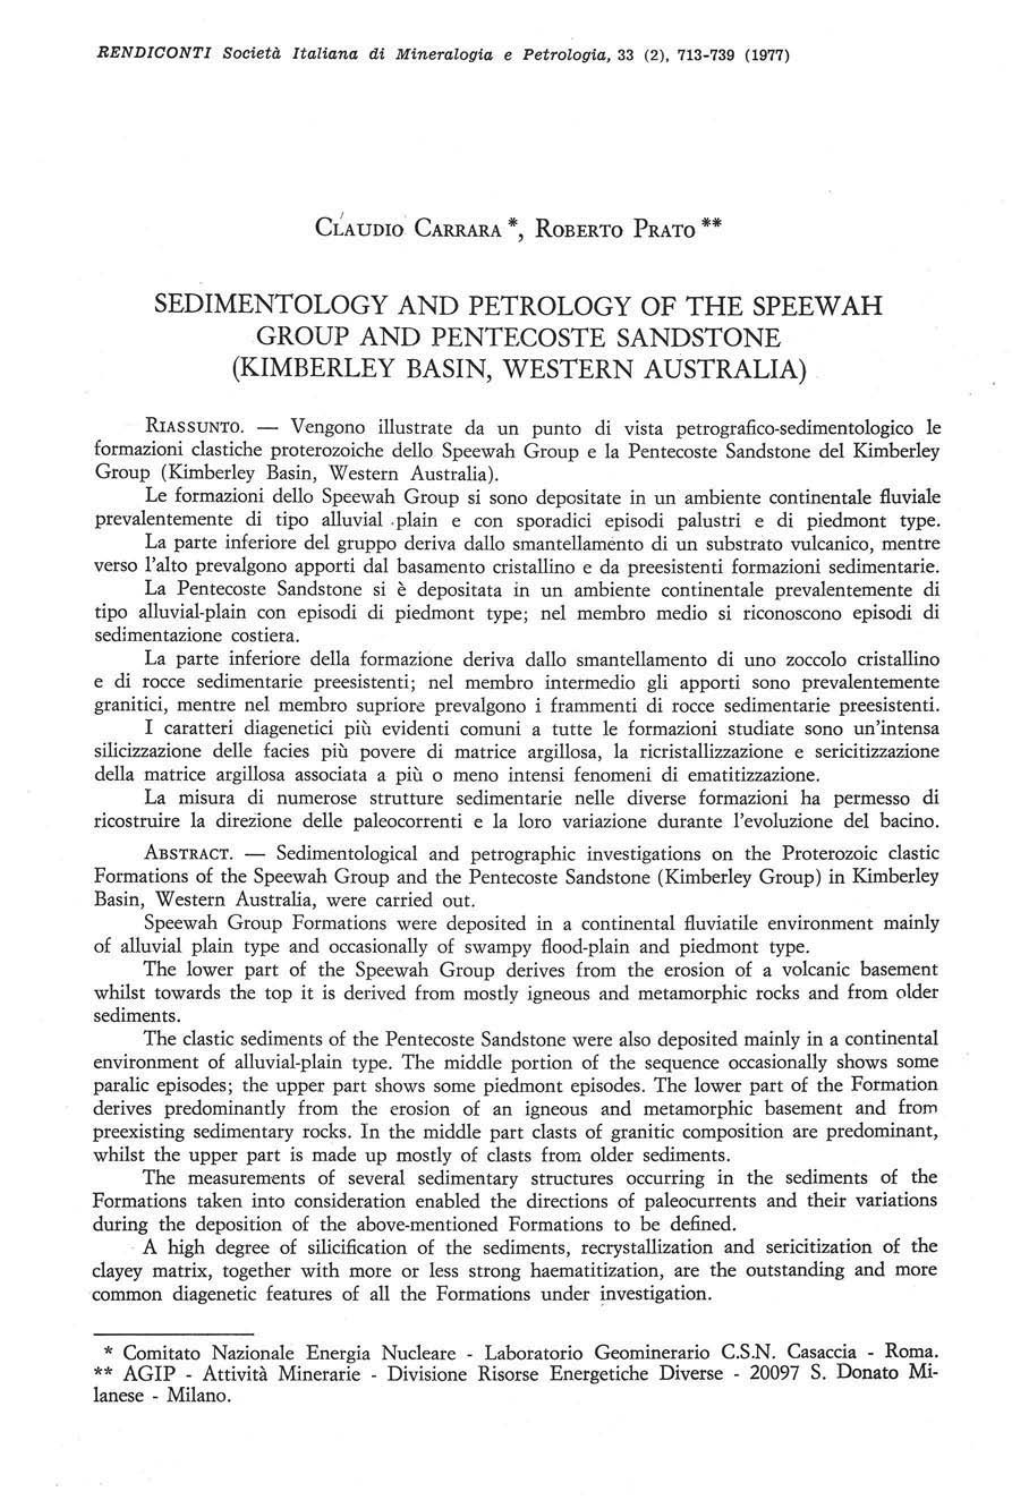 Sedimentology and Petrology of the Speew Ah Group and Pentecoste Sandstone (K Imberley Basi N, Western Australia)